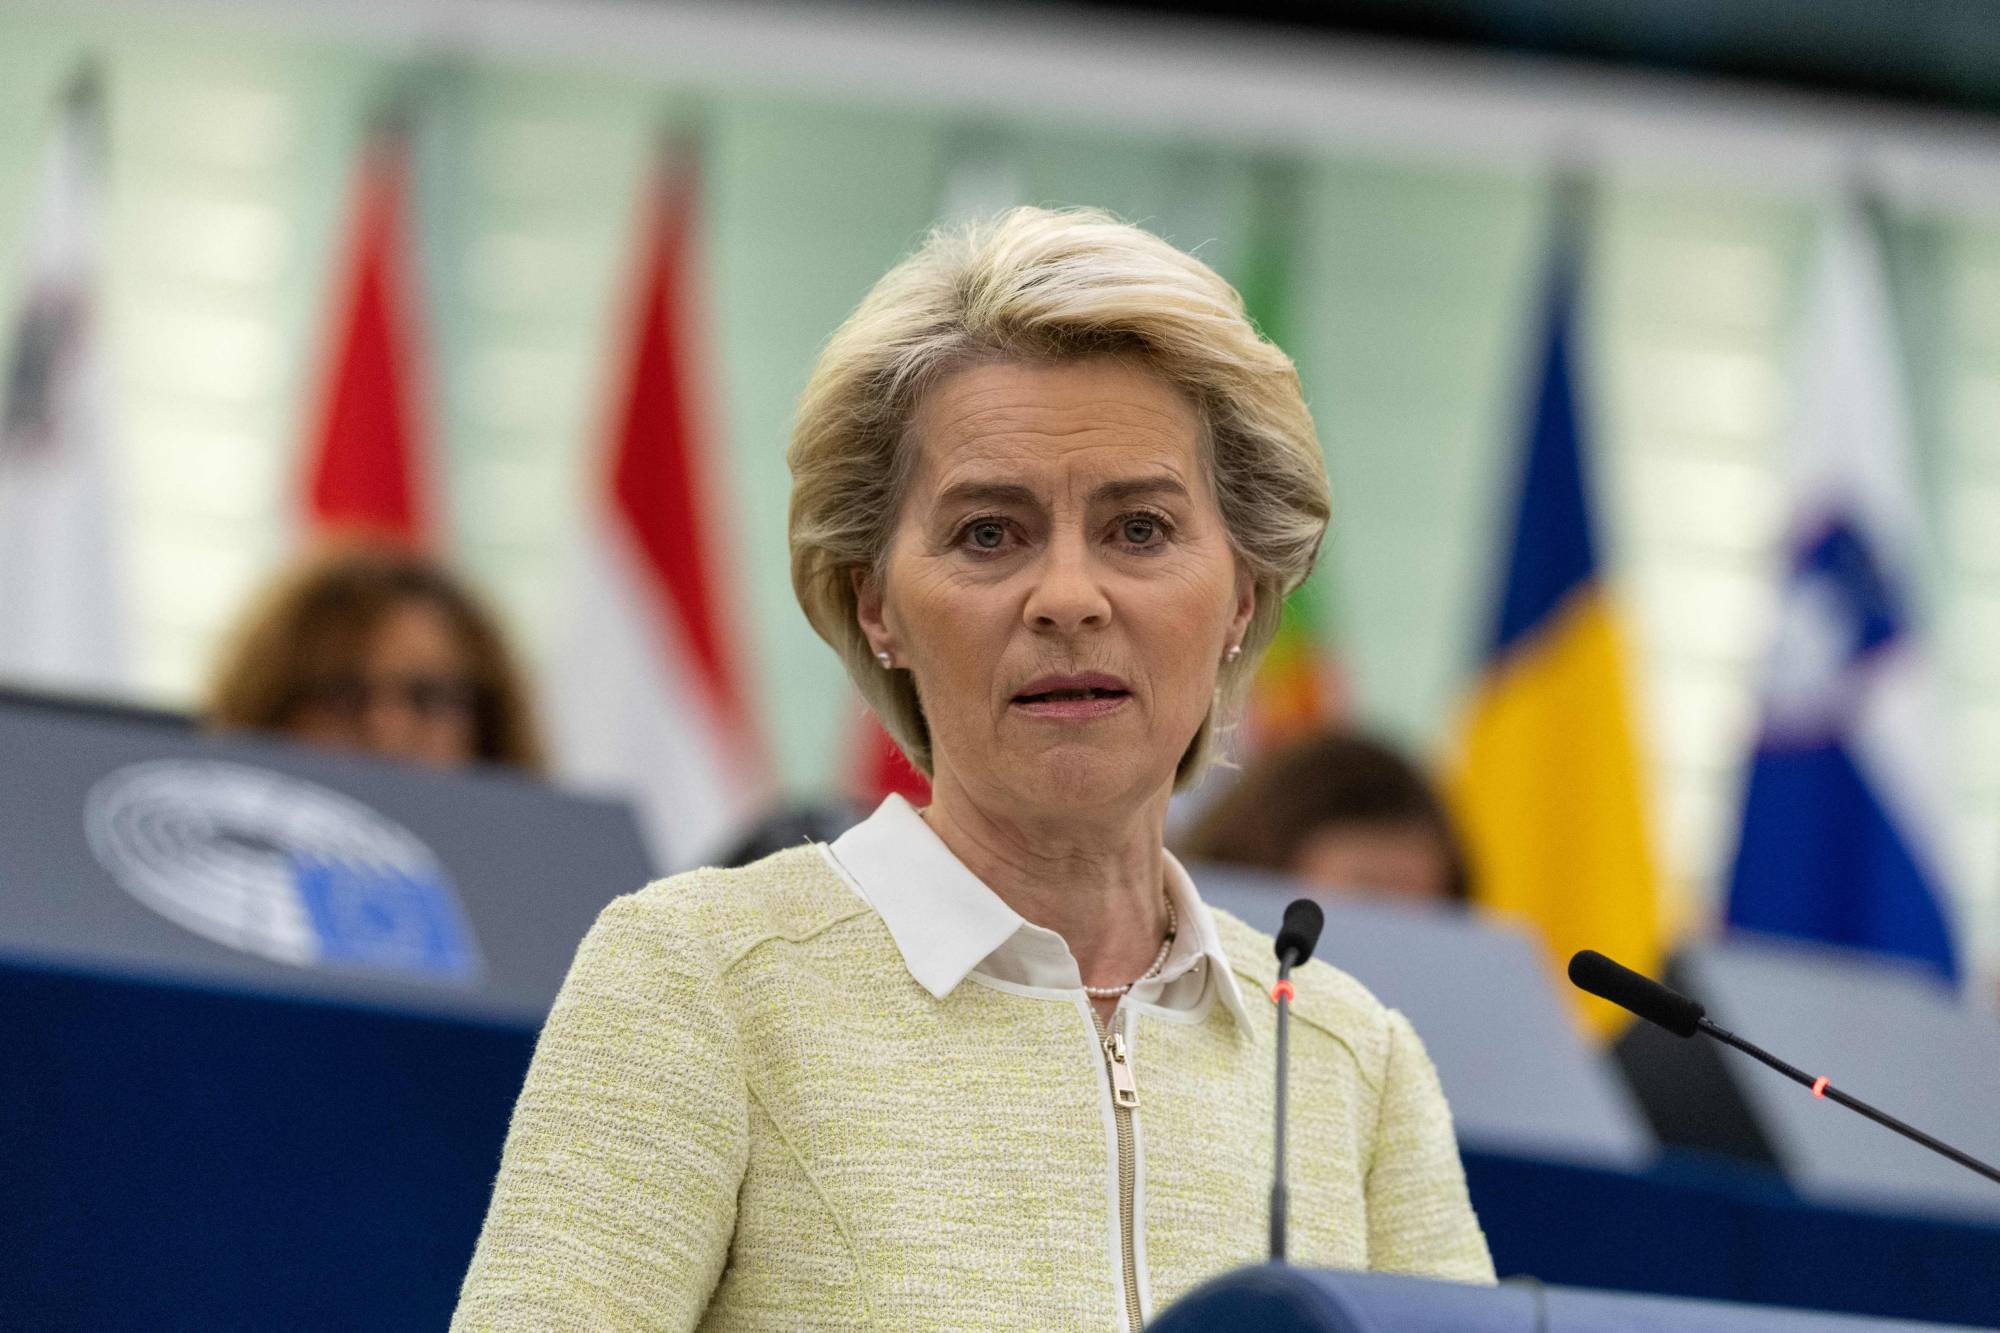 European Commission President Ursula von der Leyen speaks during a debate regarding economic sanctions against Russia, during a plenary session at the European Parliament in Strasbourg